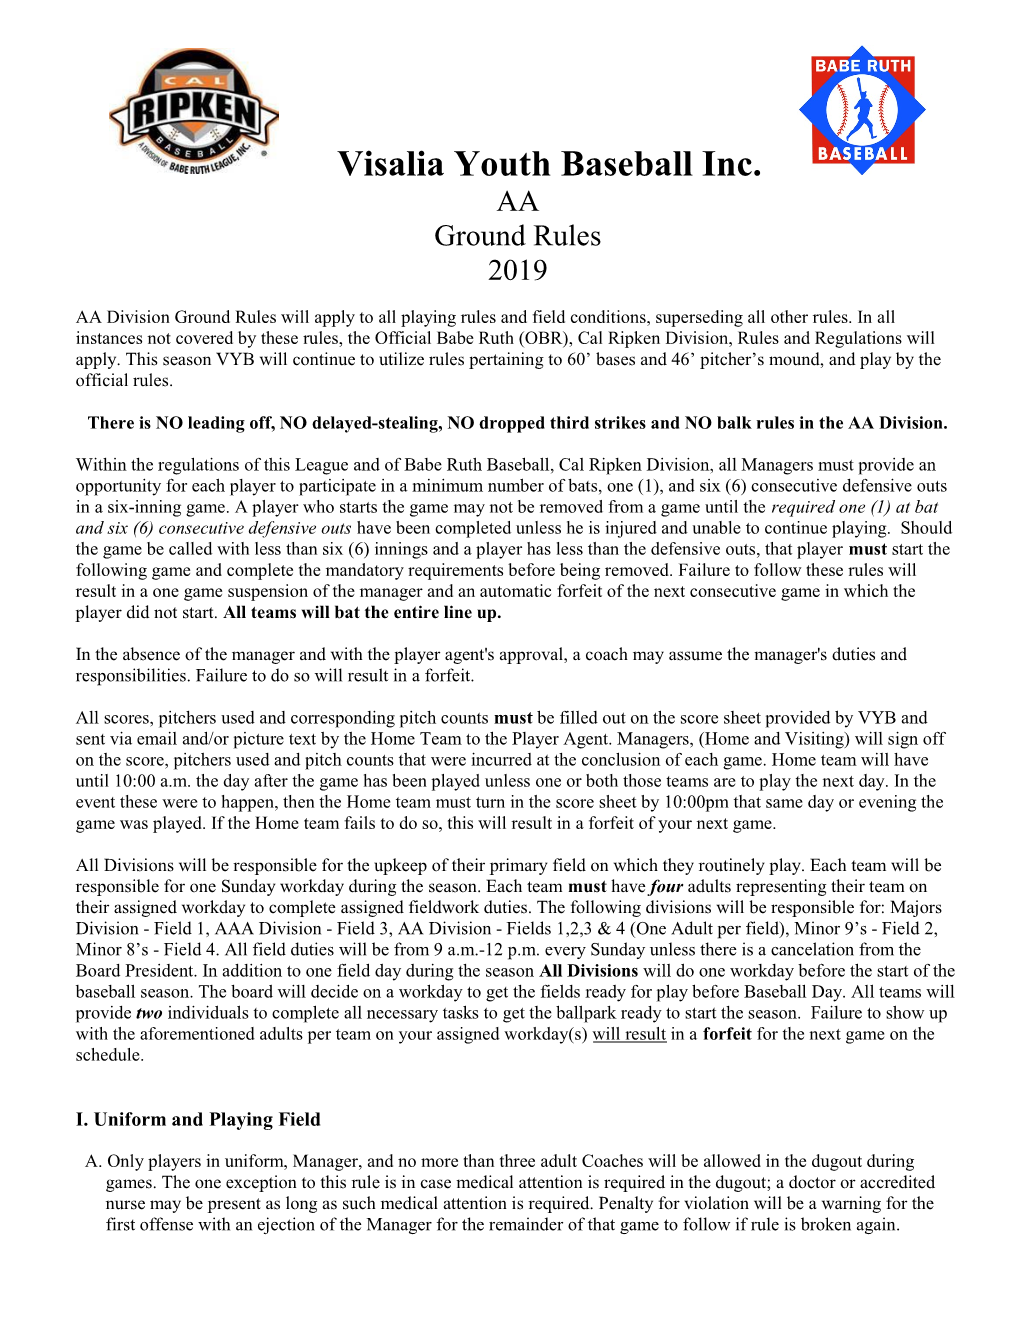 Visalia Youth Baseball Inc. AA Ground Rules 2019